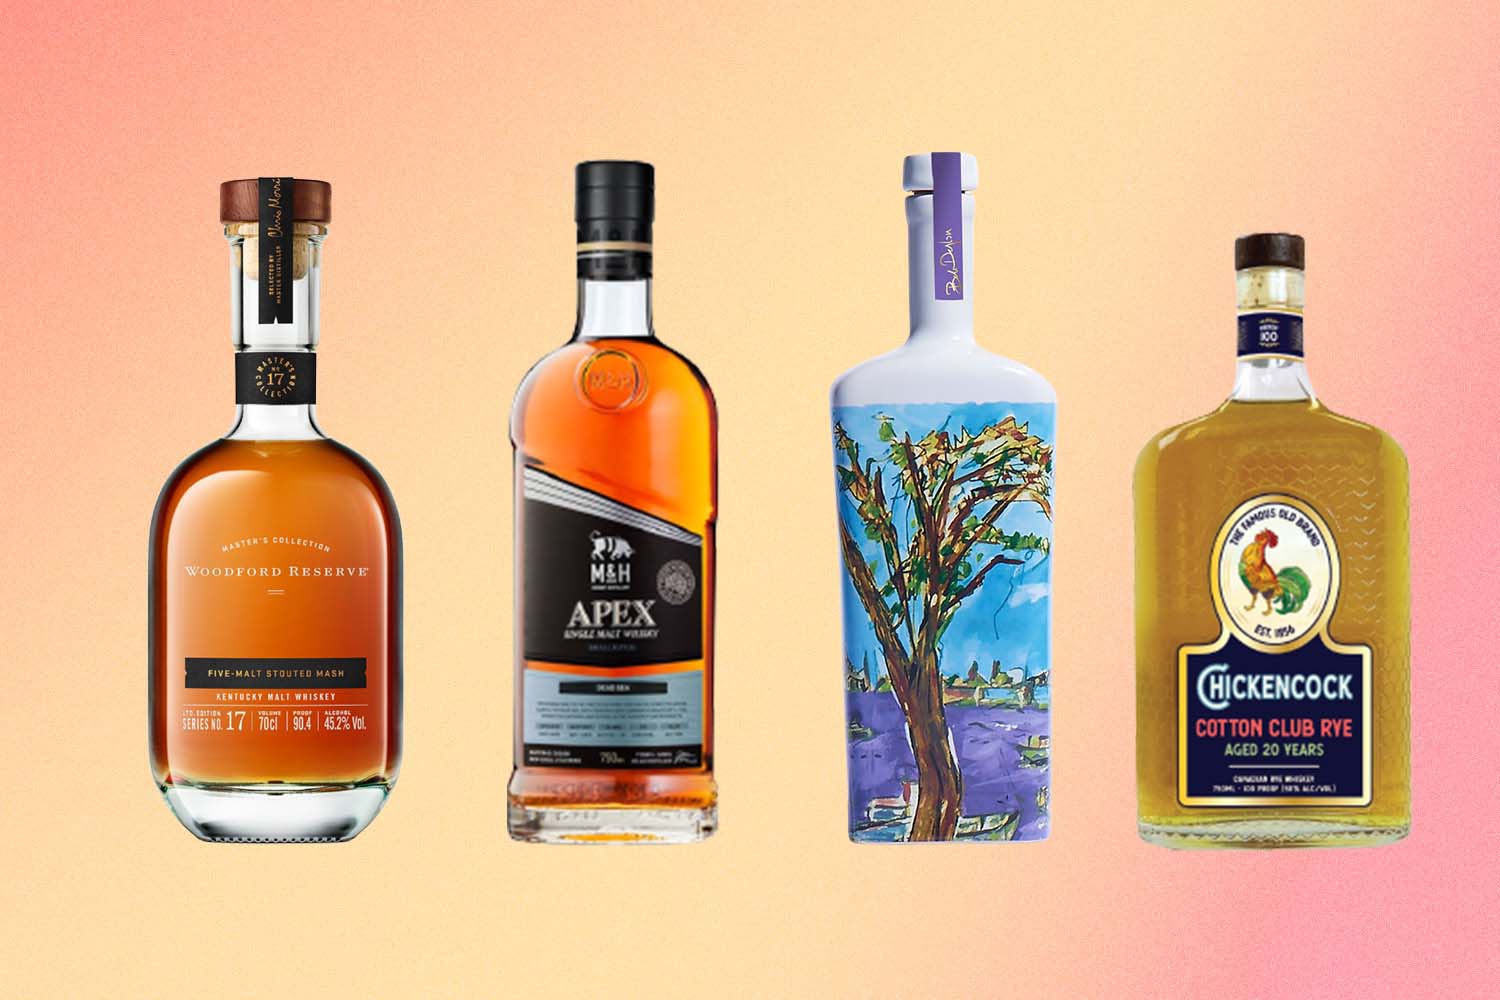 Best rye whiskey brands to drink in 2022